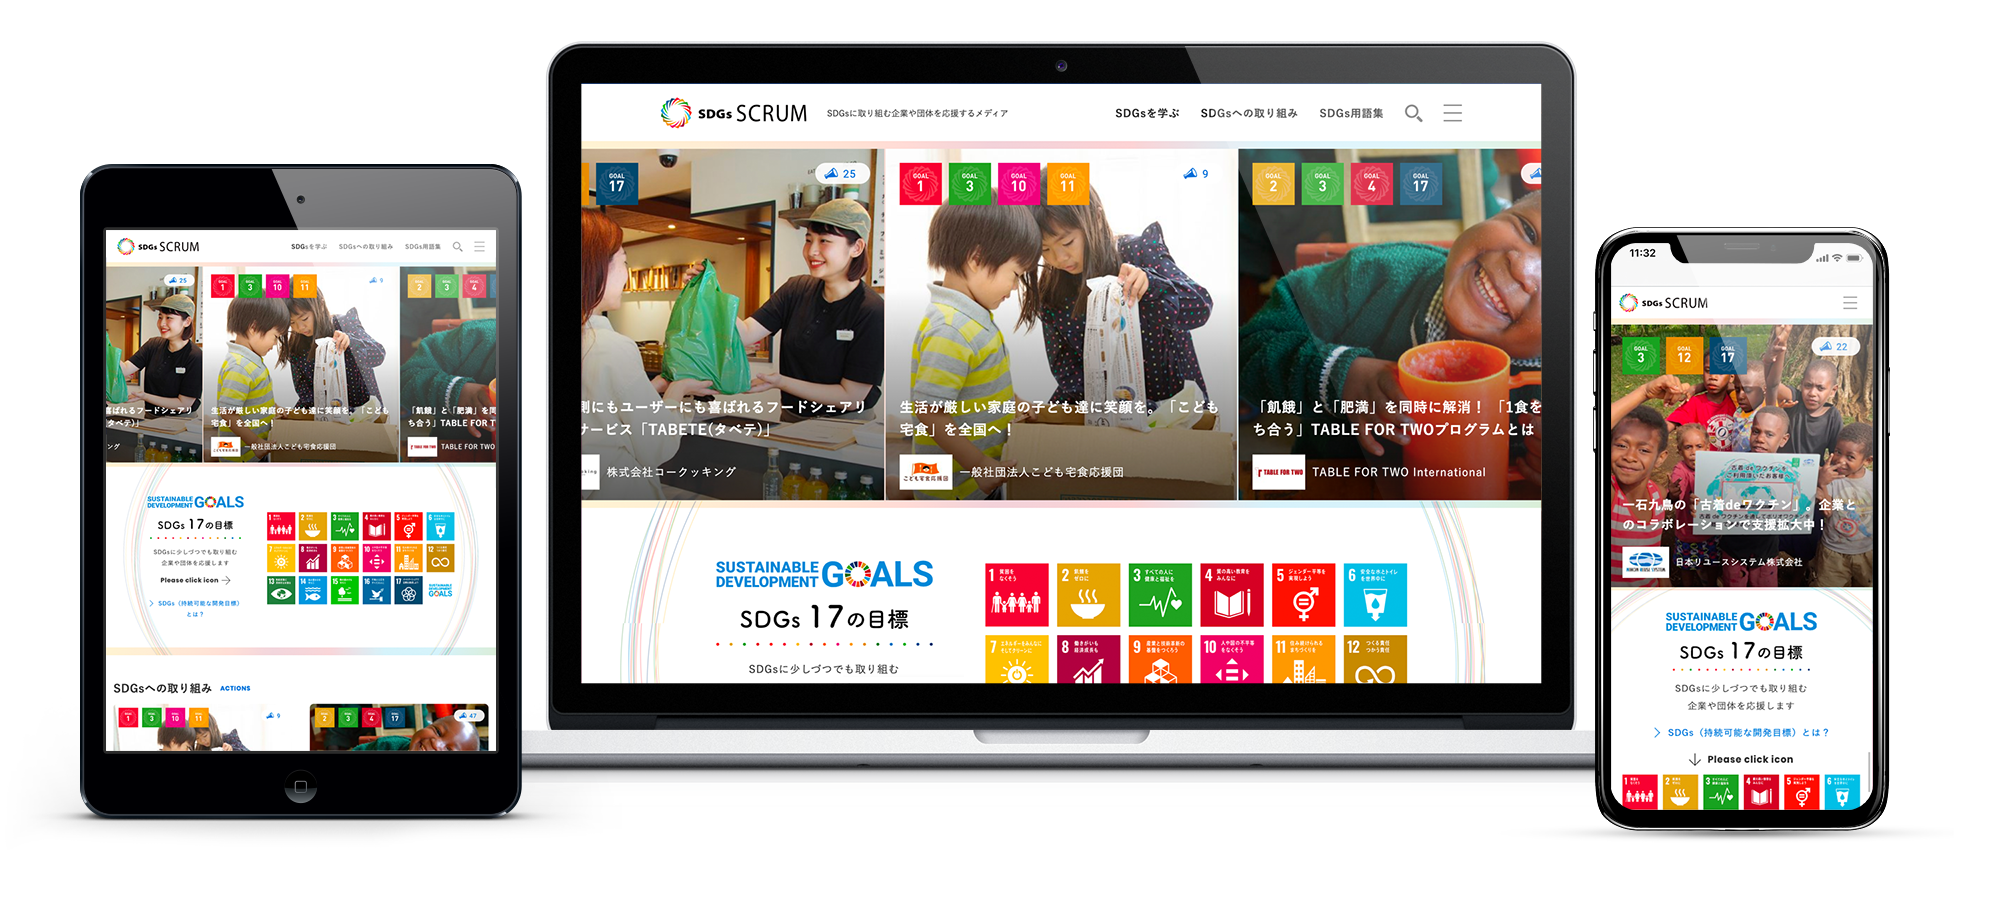 SDGs SCRUM webサイトのモックアップ